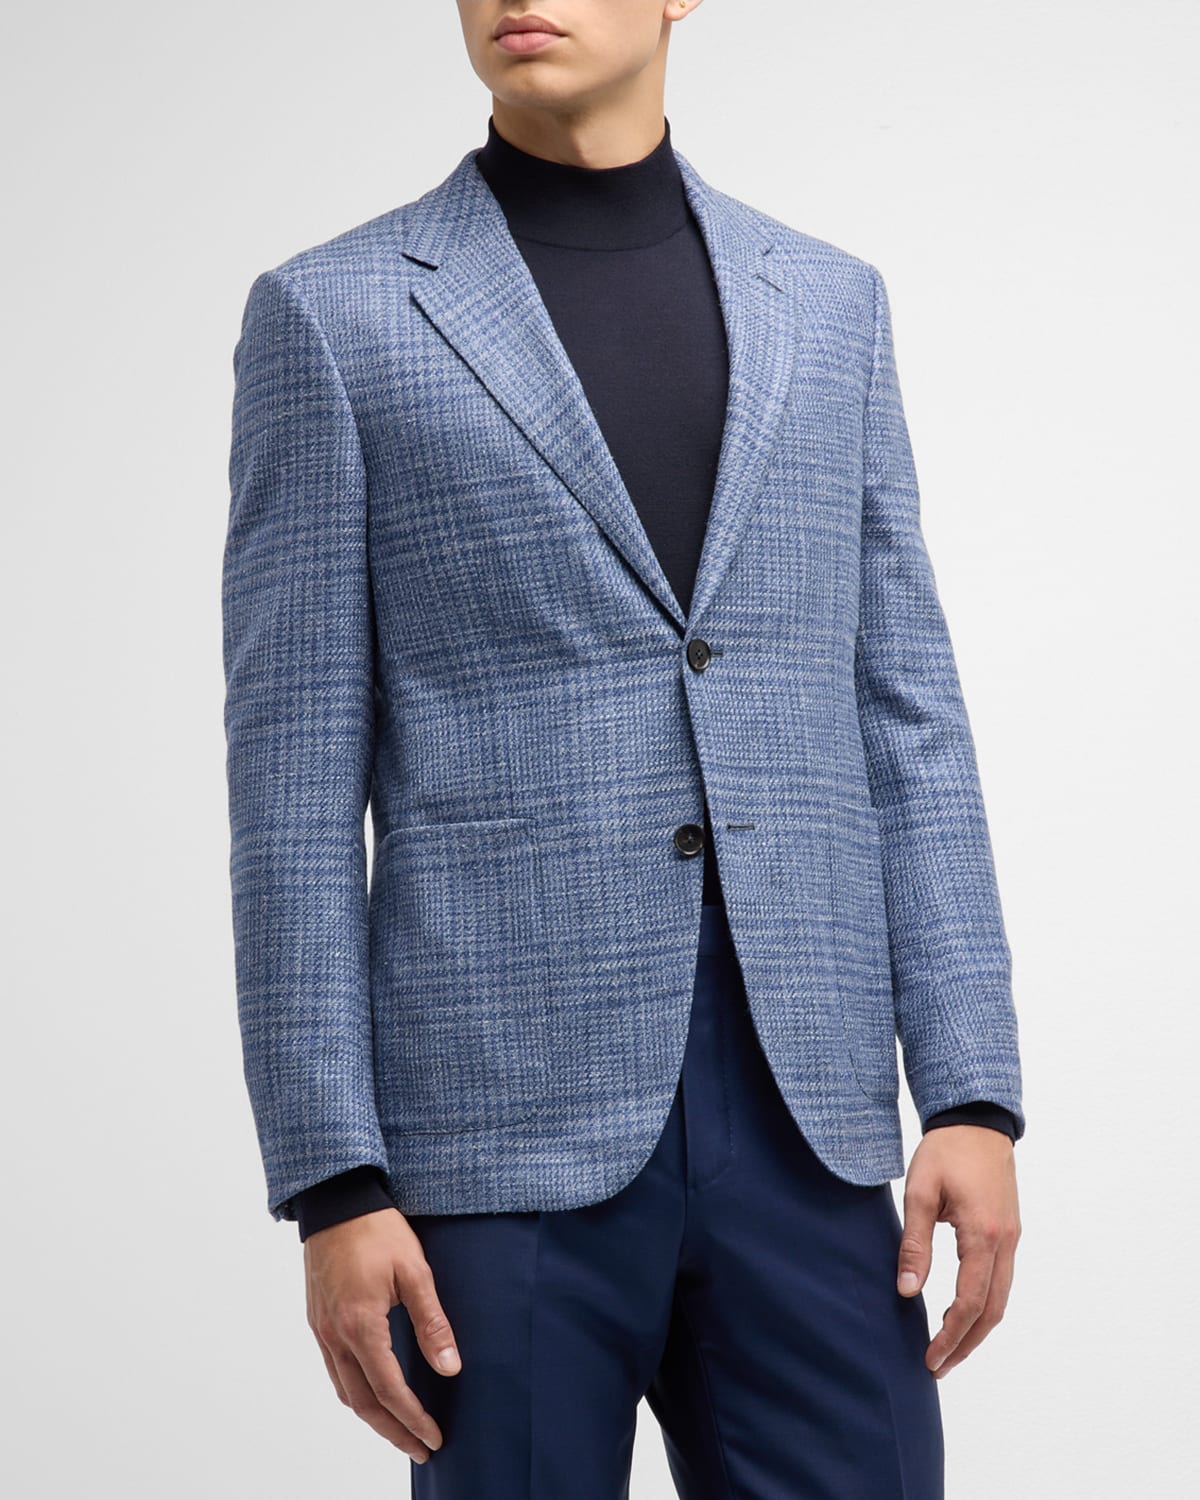 Zegna Men's Macro Plaid Sport Coat In Medium Blue Check